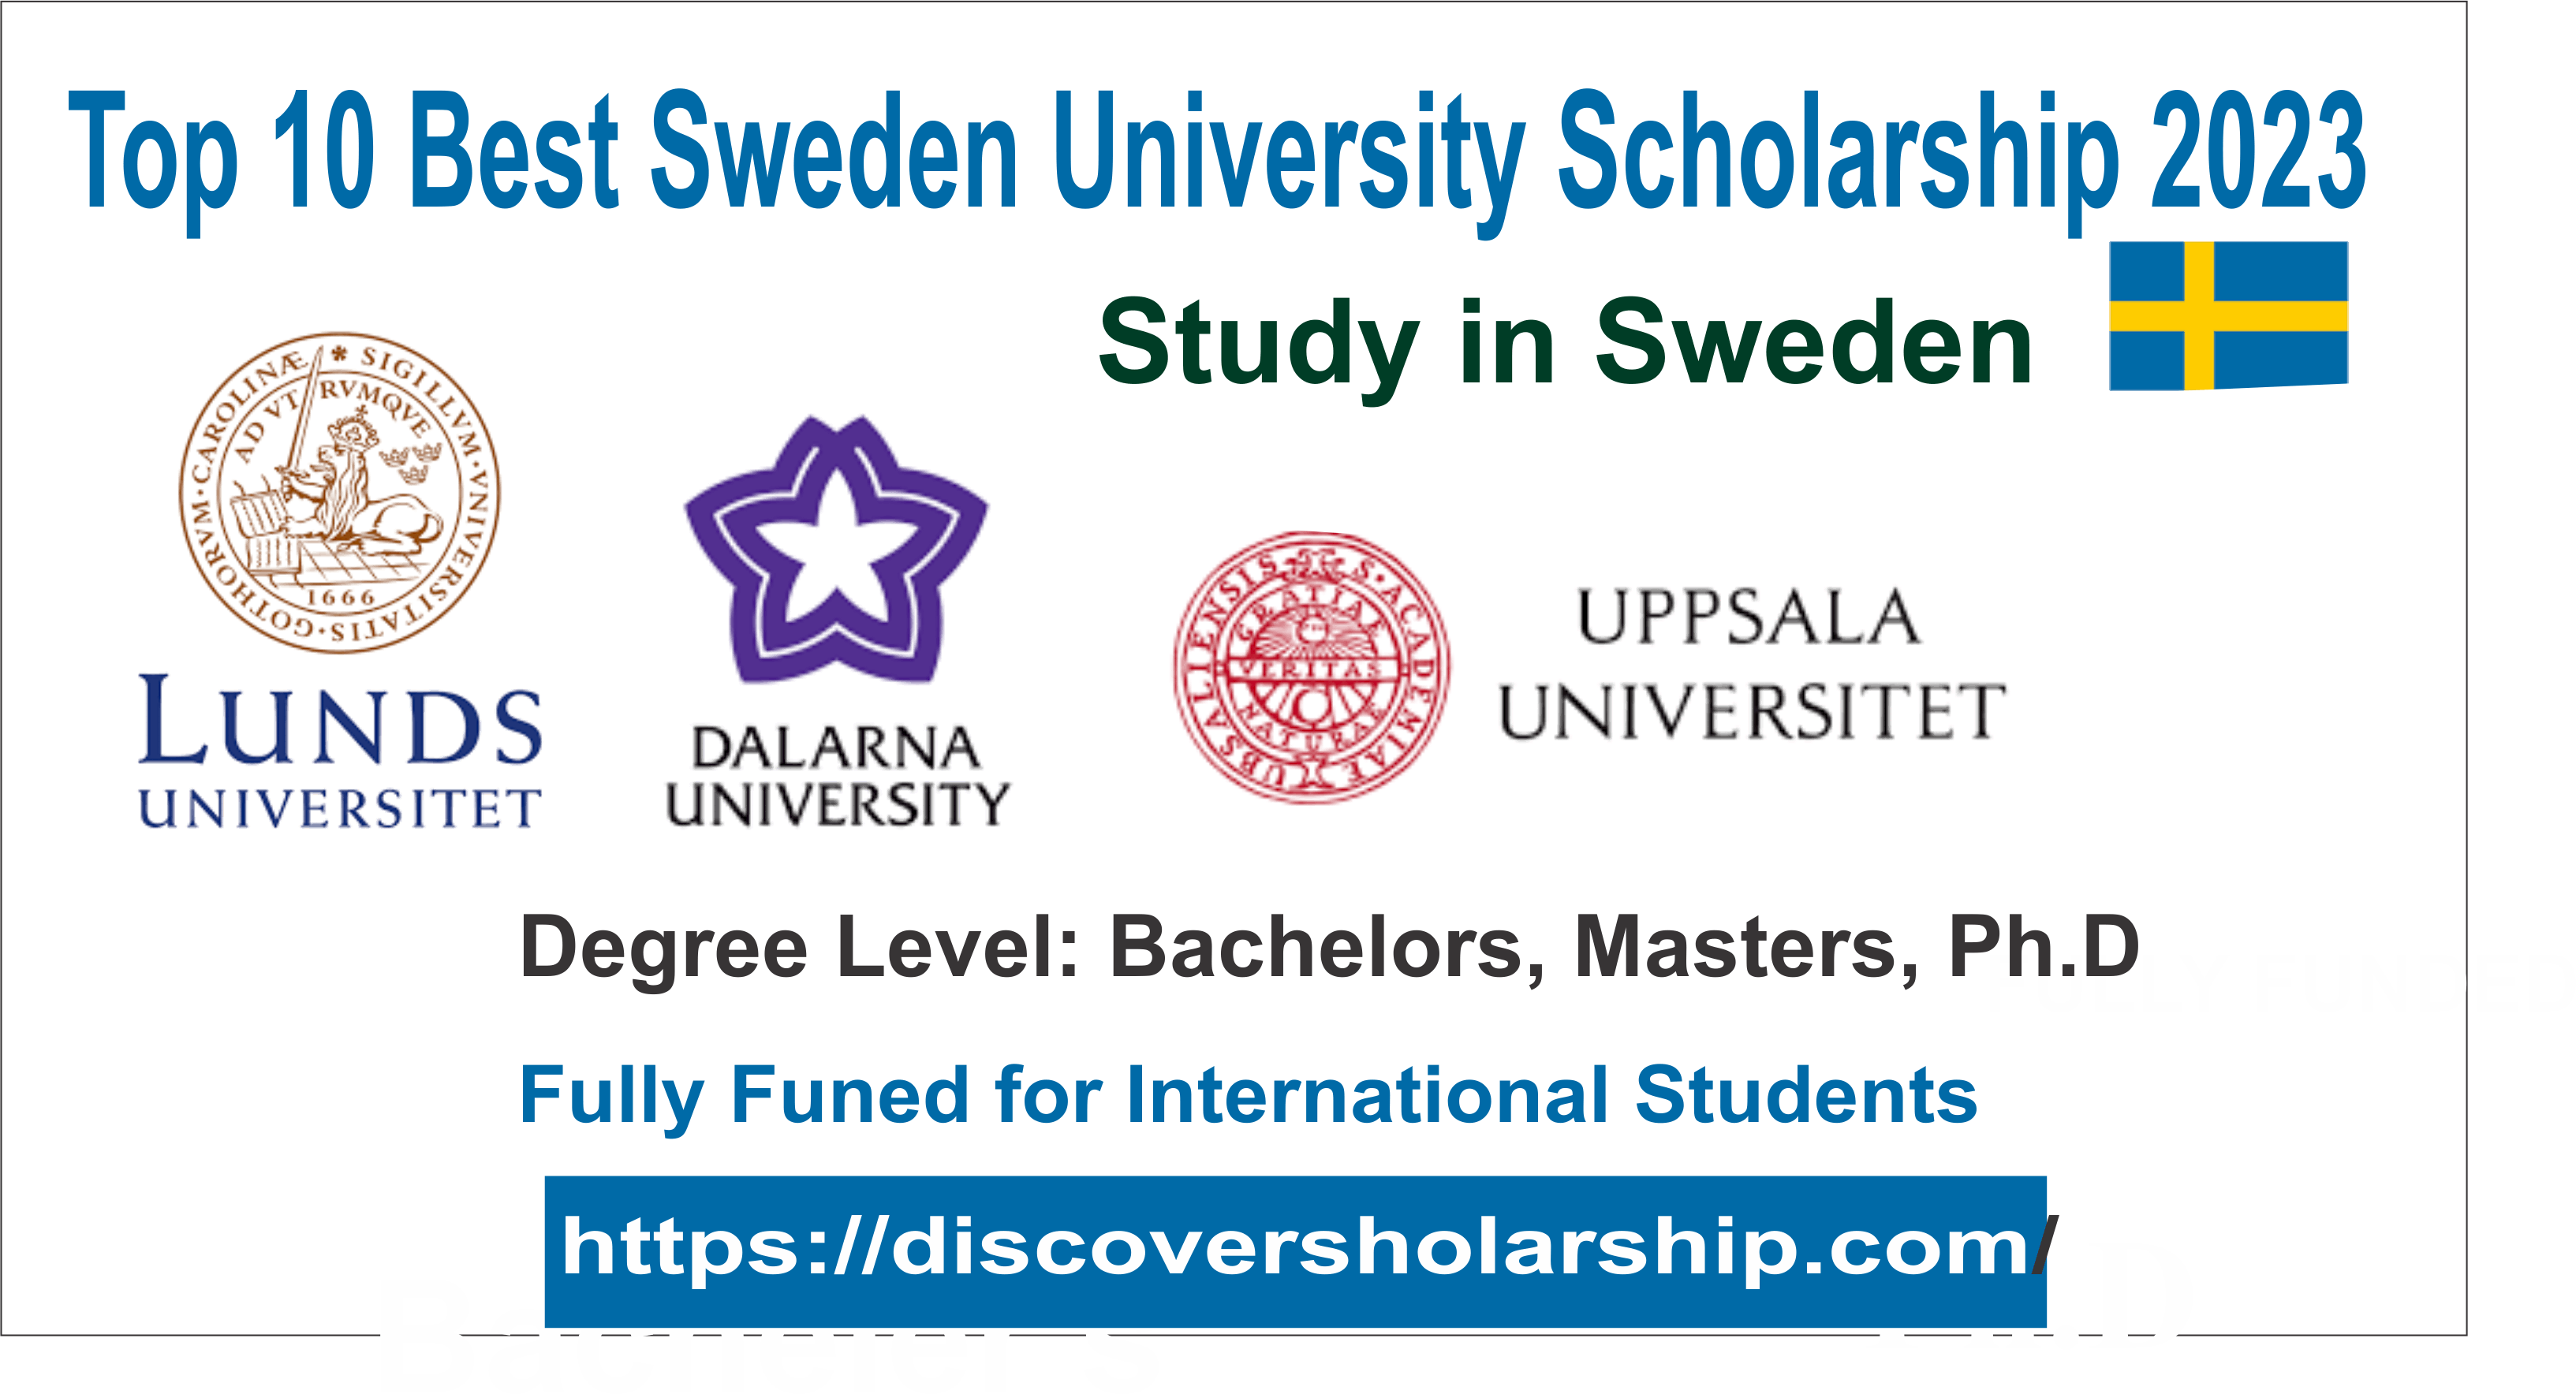 10 Best Scholarships in Sweden for International Students